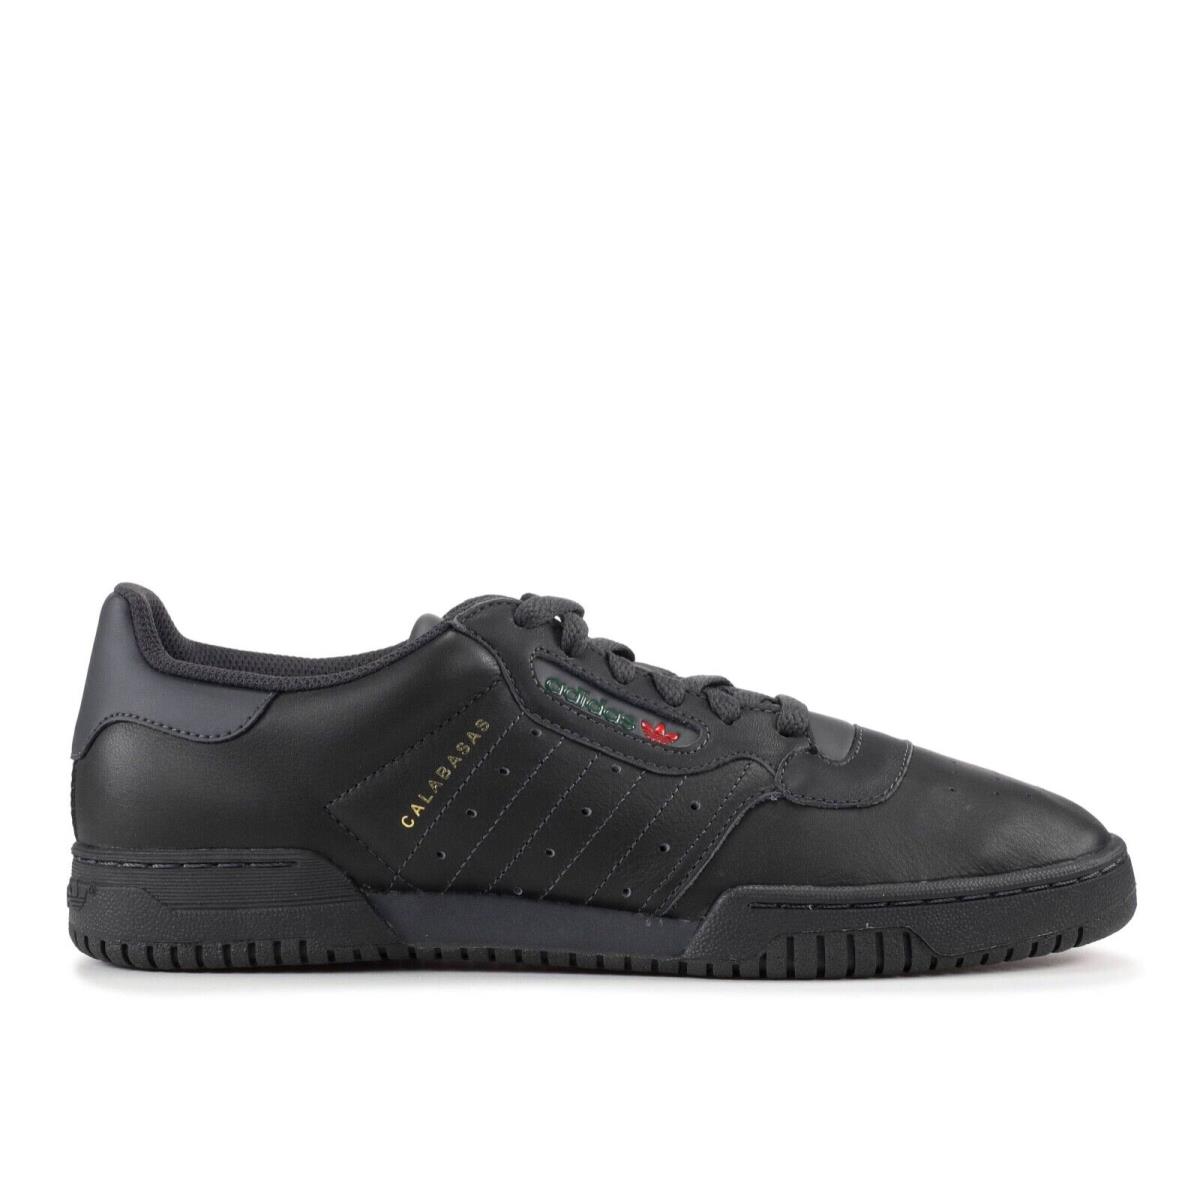 Men`s Adidas Yeezy Powerphase Athletic Fashion Sneakers CG6420 - Black